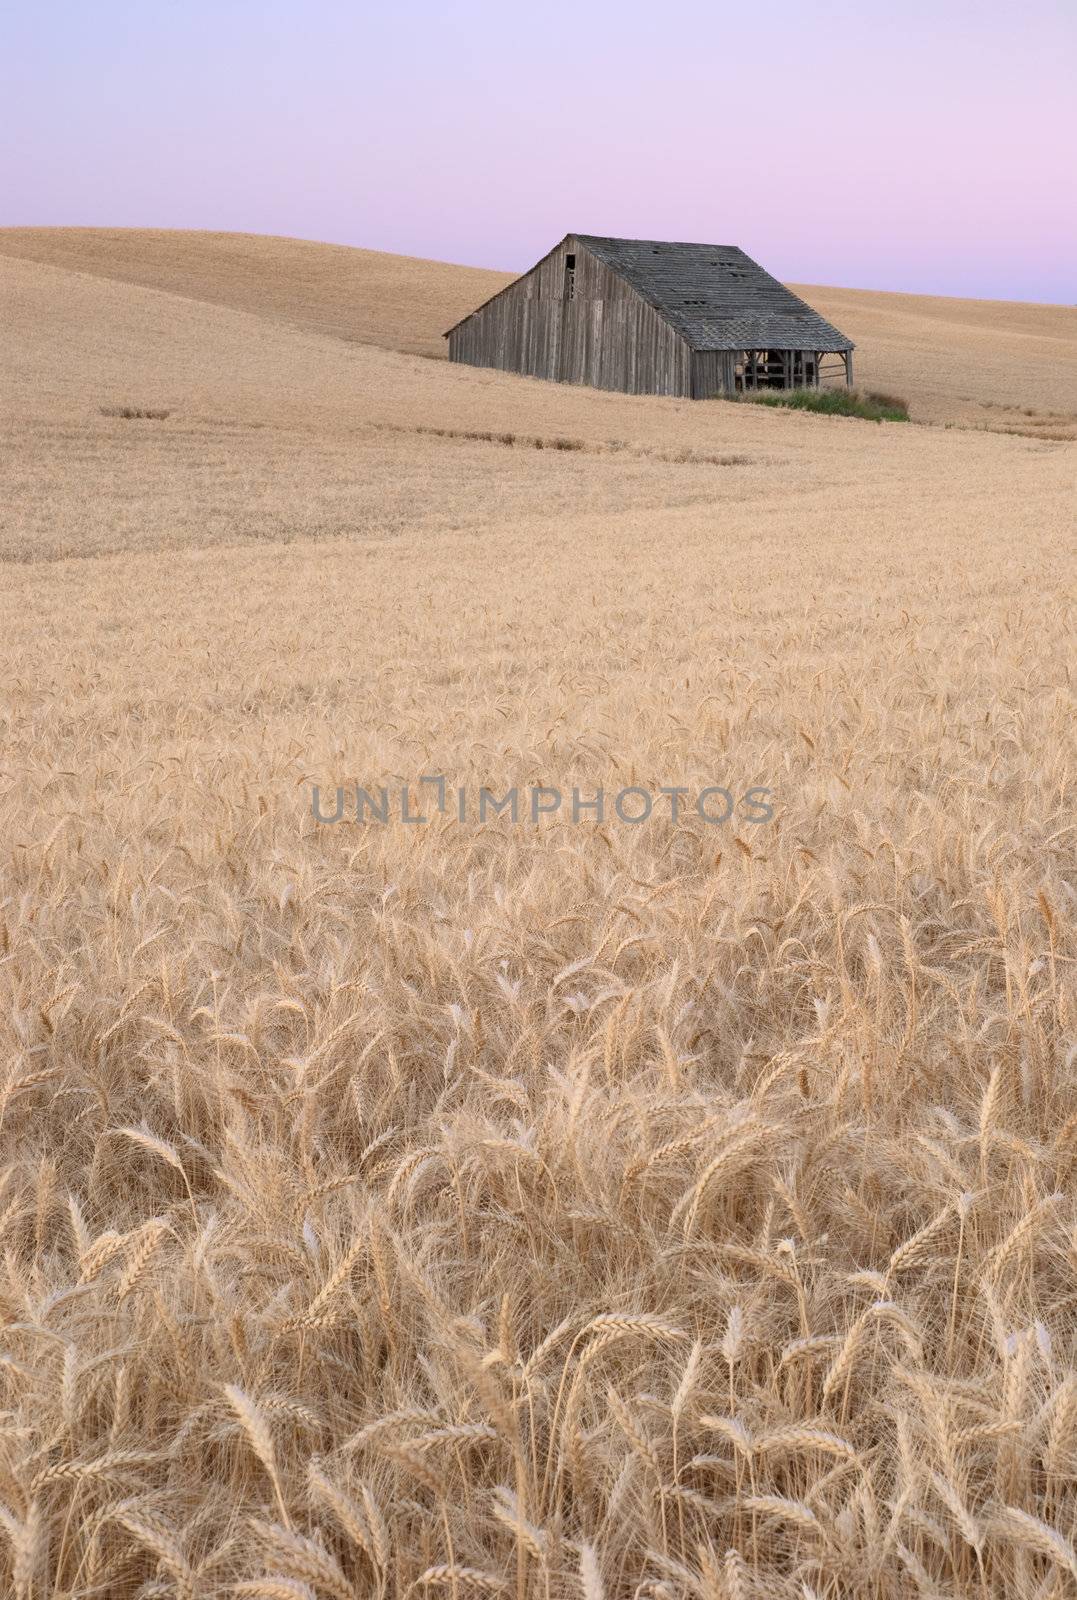 Old barn and wheat field at twilight, Whitman County, Washington, USA by CharlesBolin